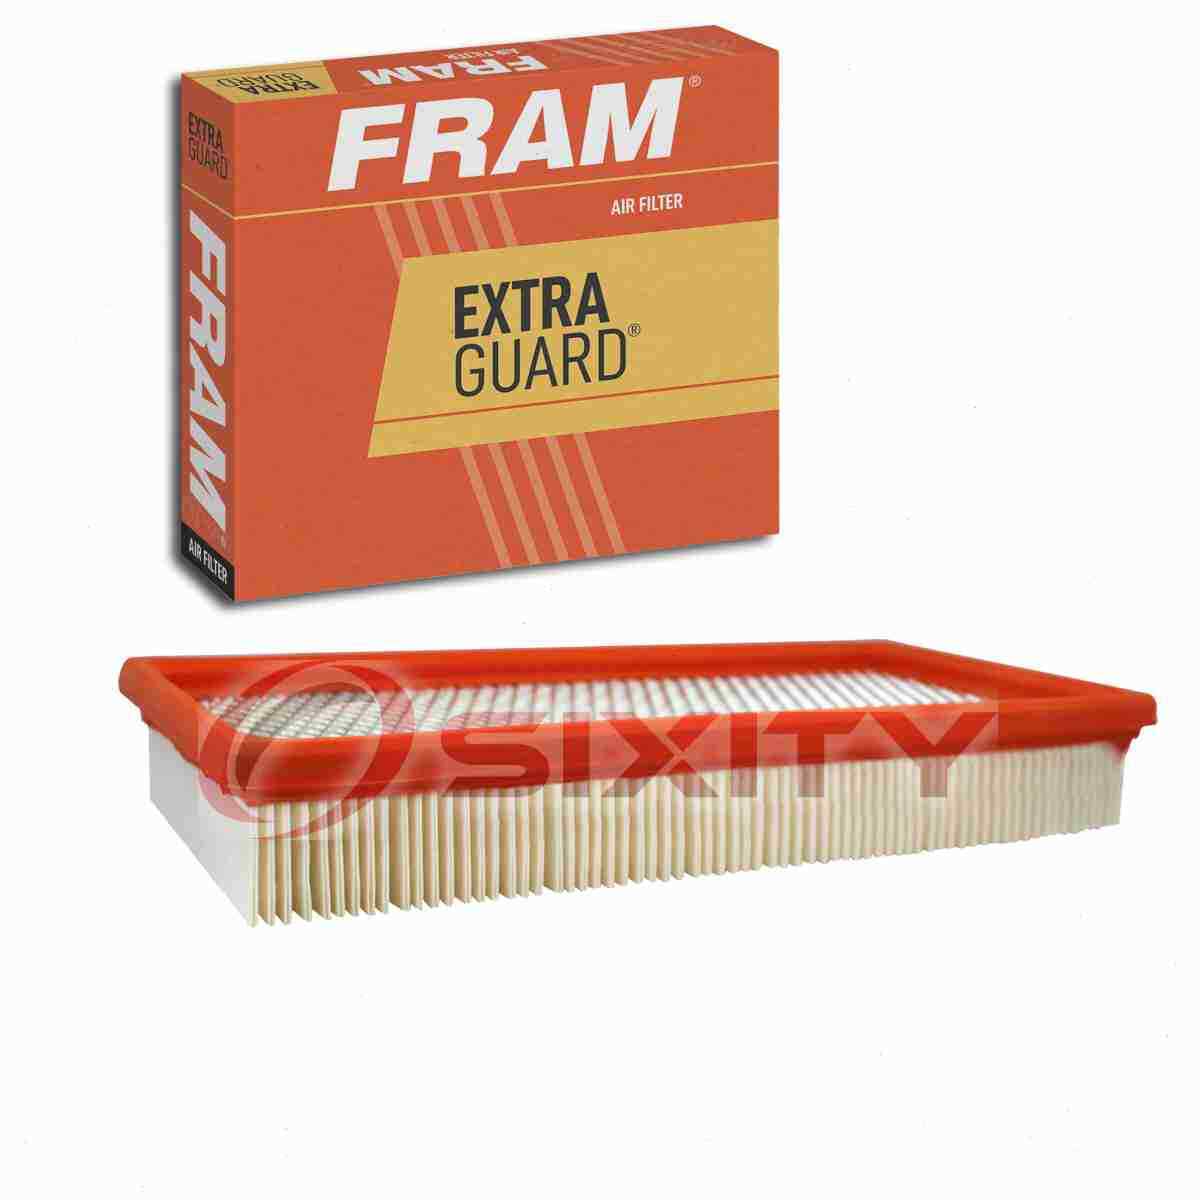 FRAM Extra Guard Air Filter for 1991 Eagle Premier Intake Inlet Manifold qj